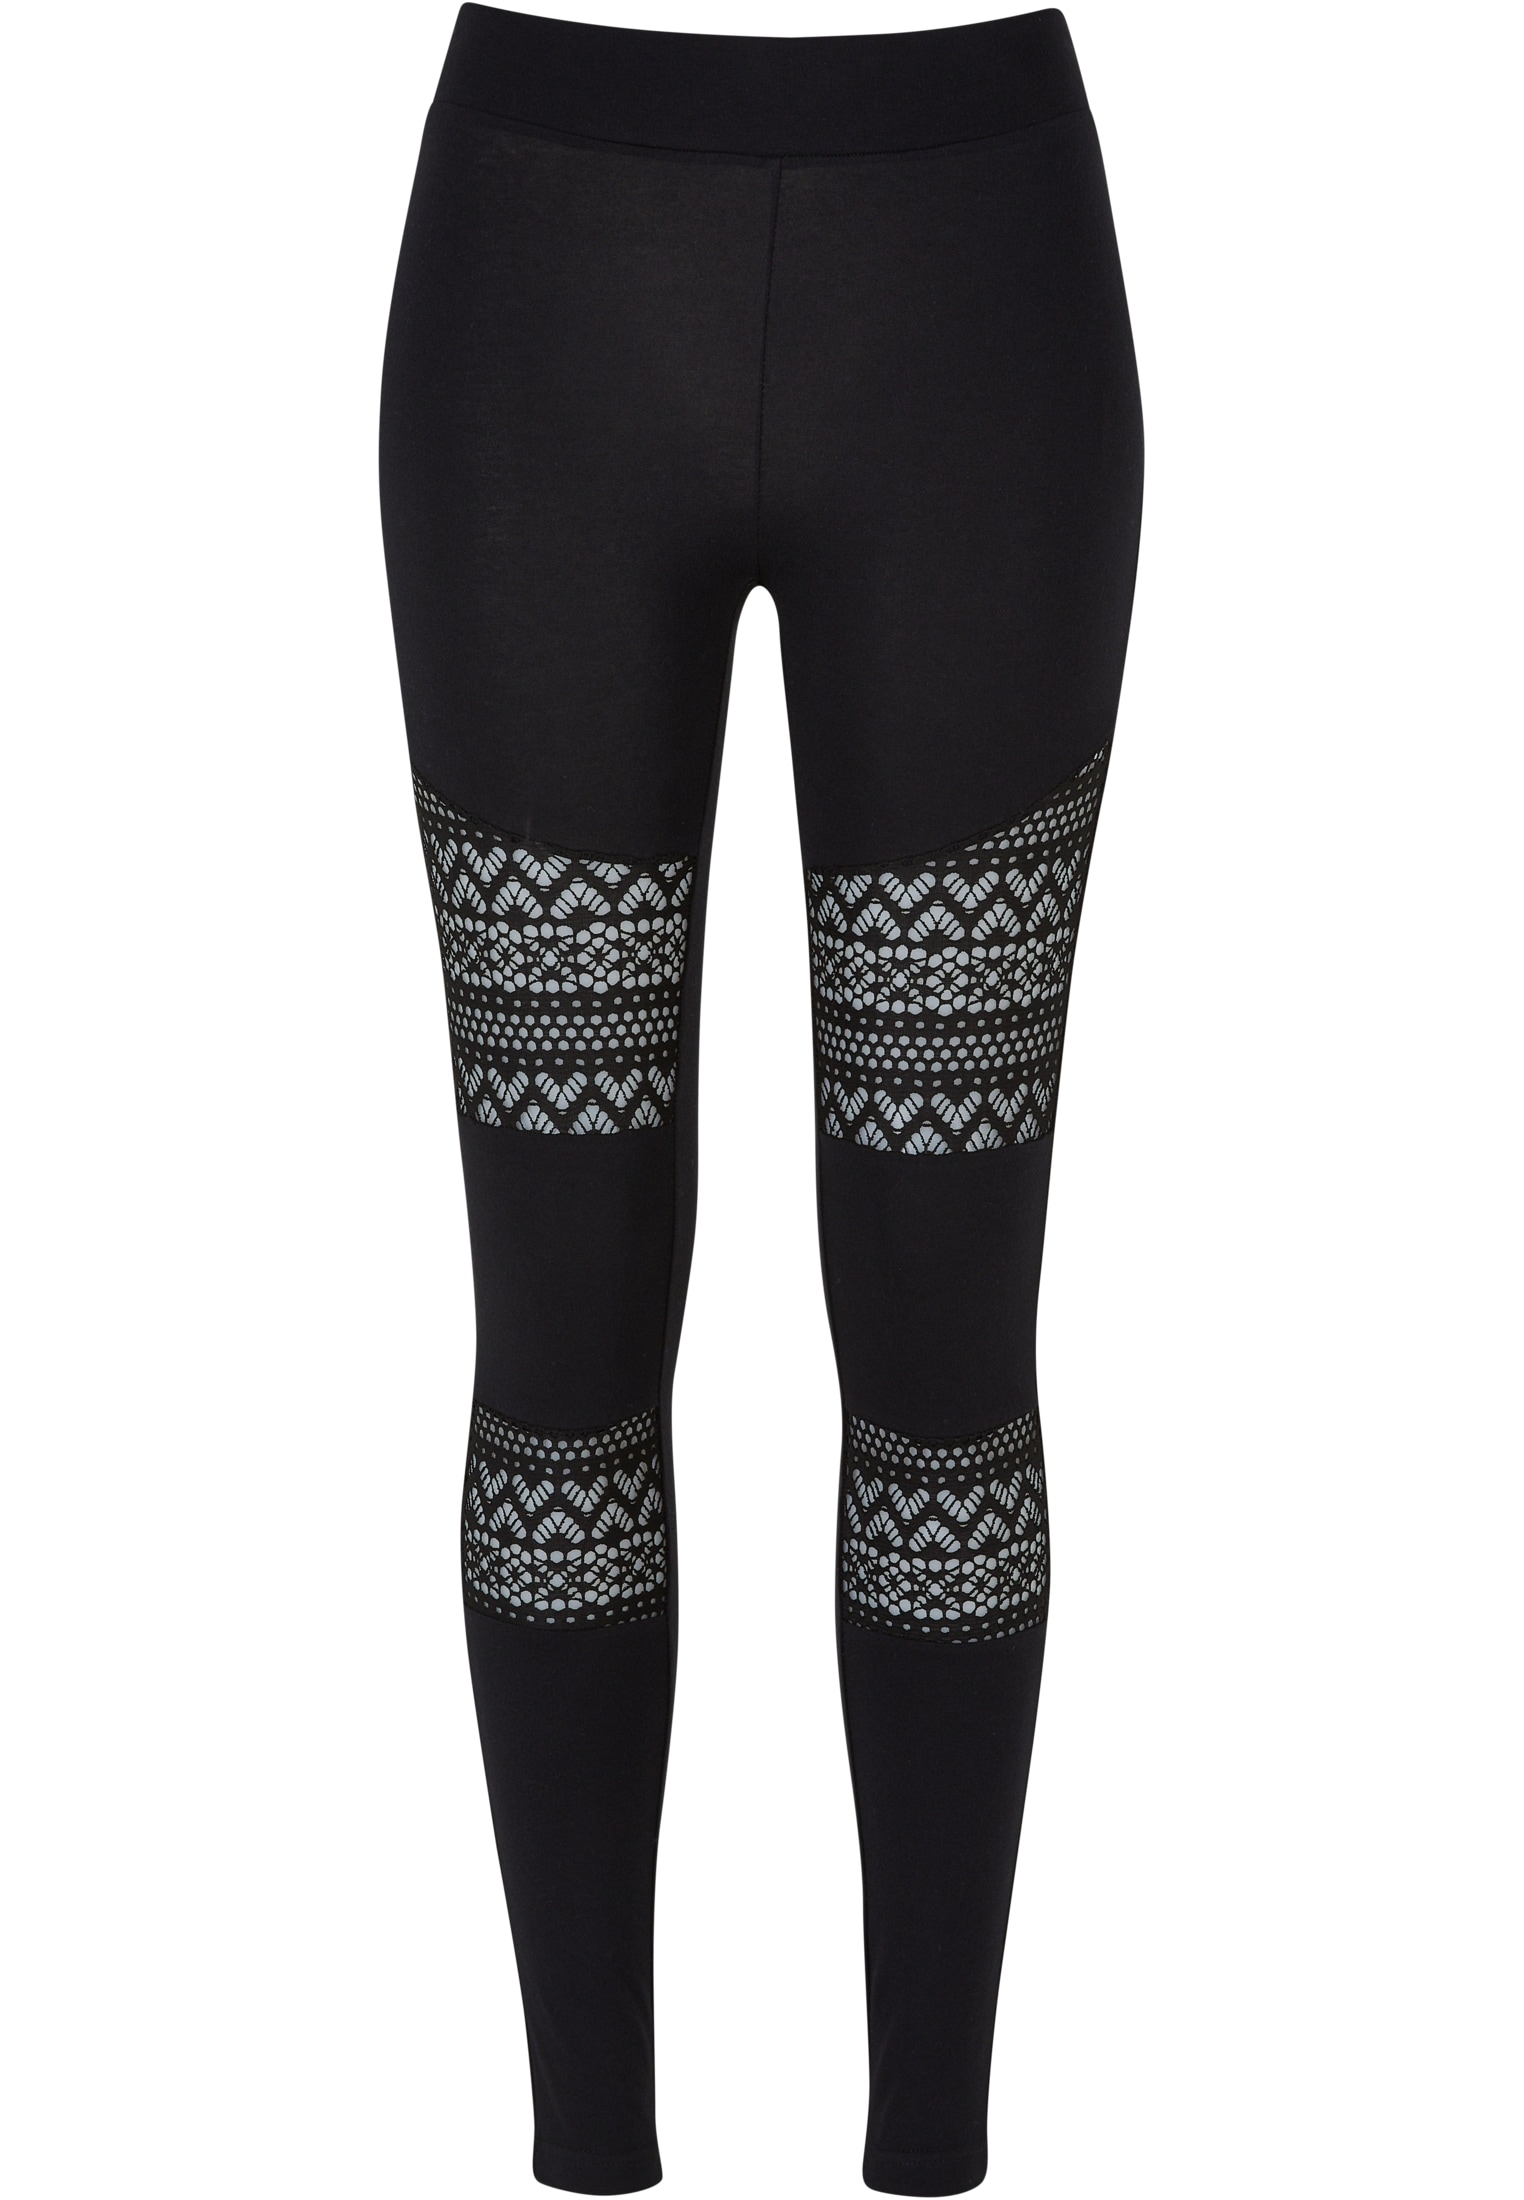 URBAN CLASSICS Leggings »Damen Ladies (1 Crochet tlg.) Lace kaufen | Leggings«, Inset BAUR online